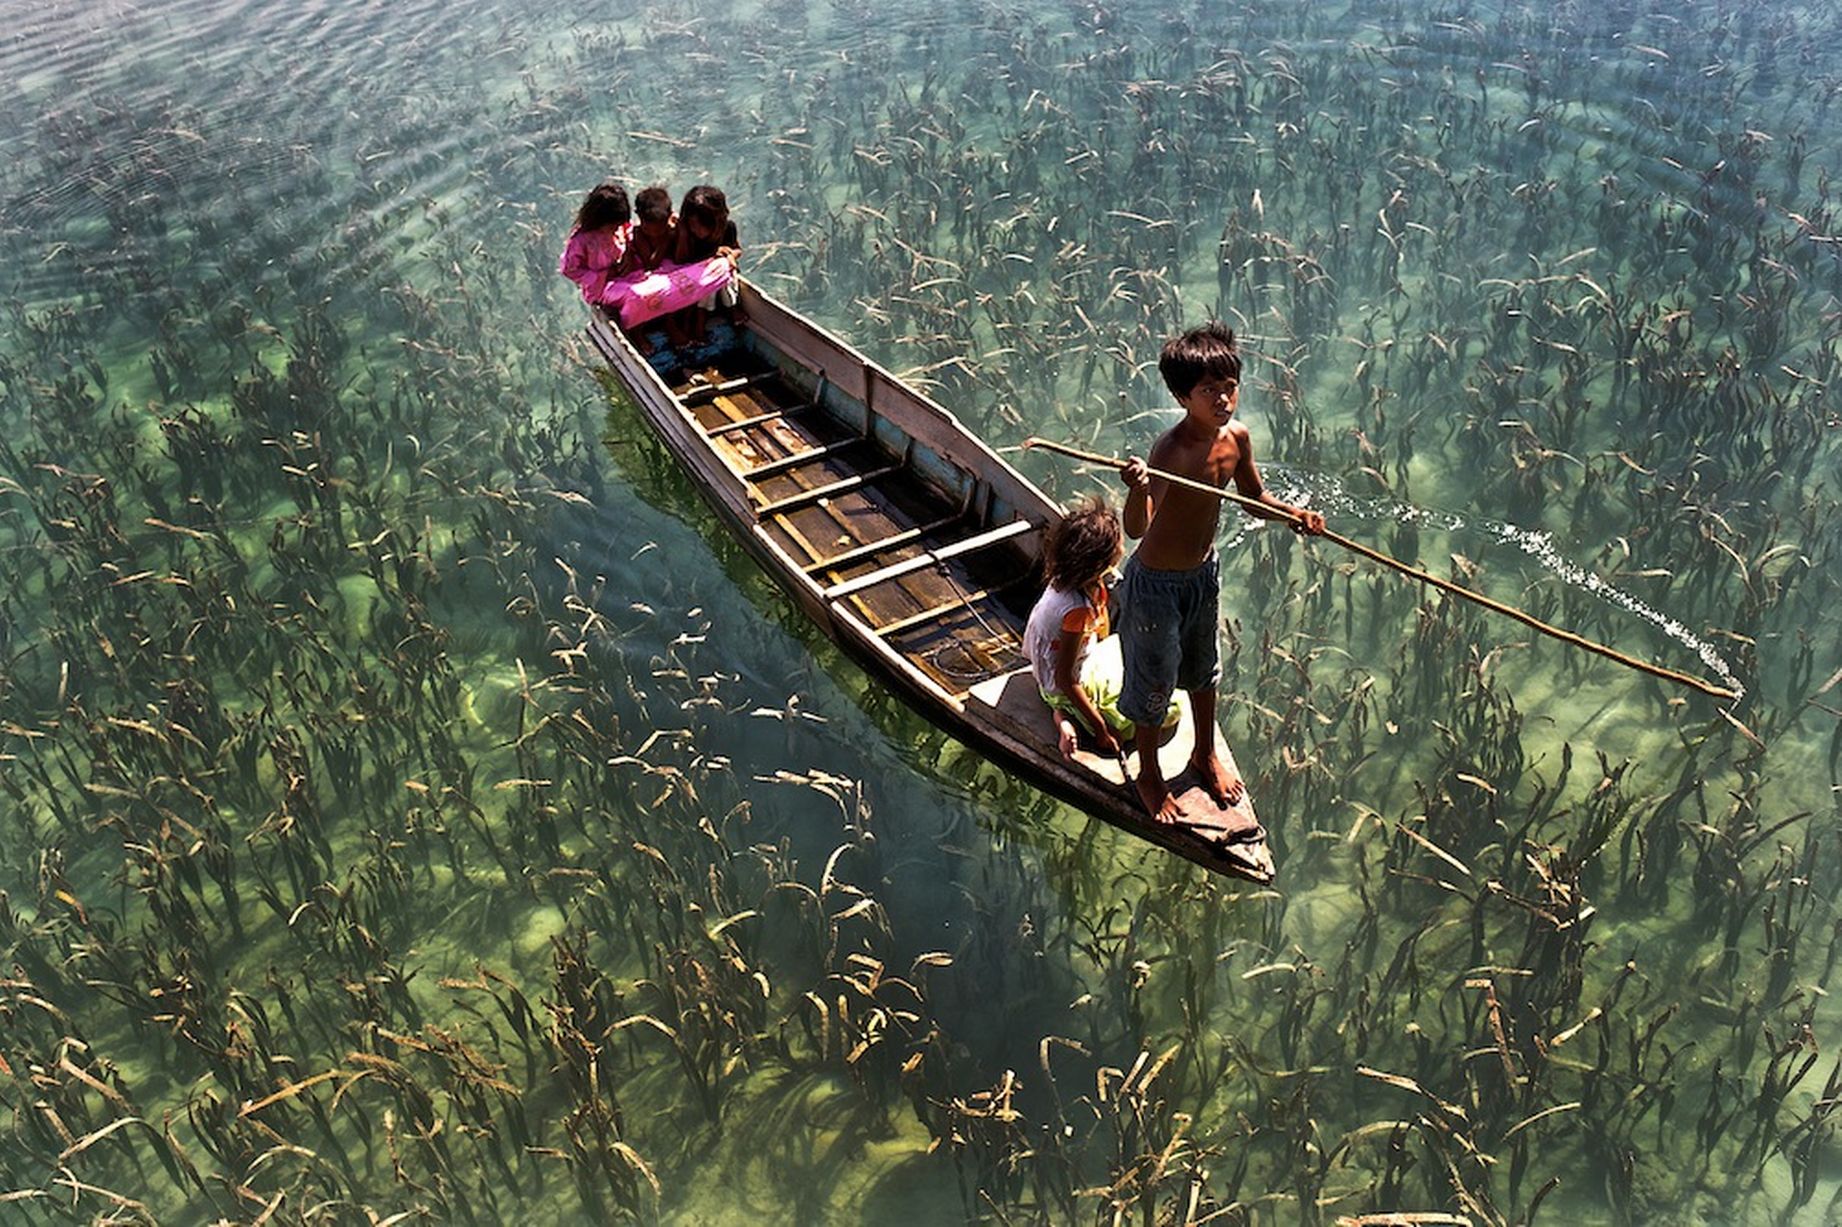 Bajau people of Malaysia - Bajau Children Boat#